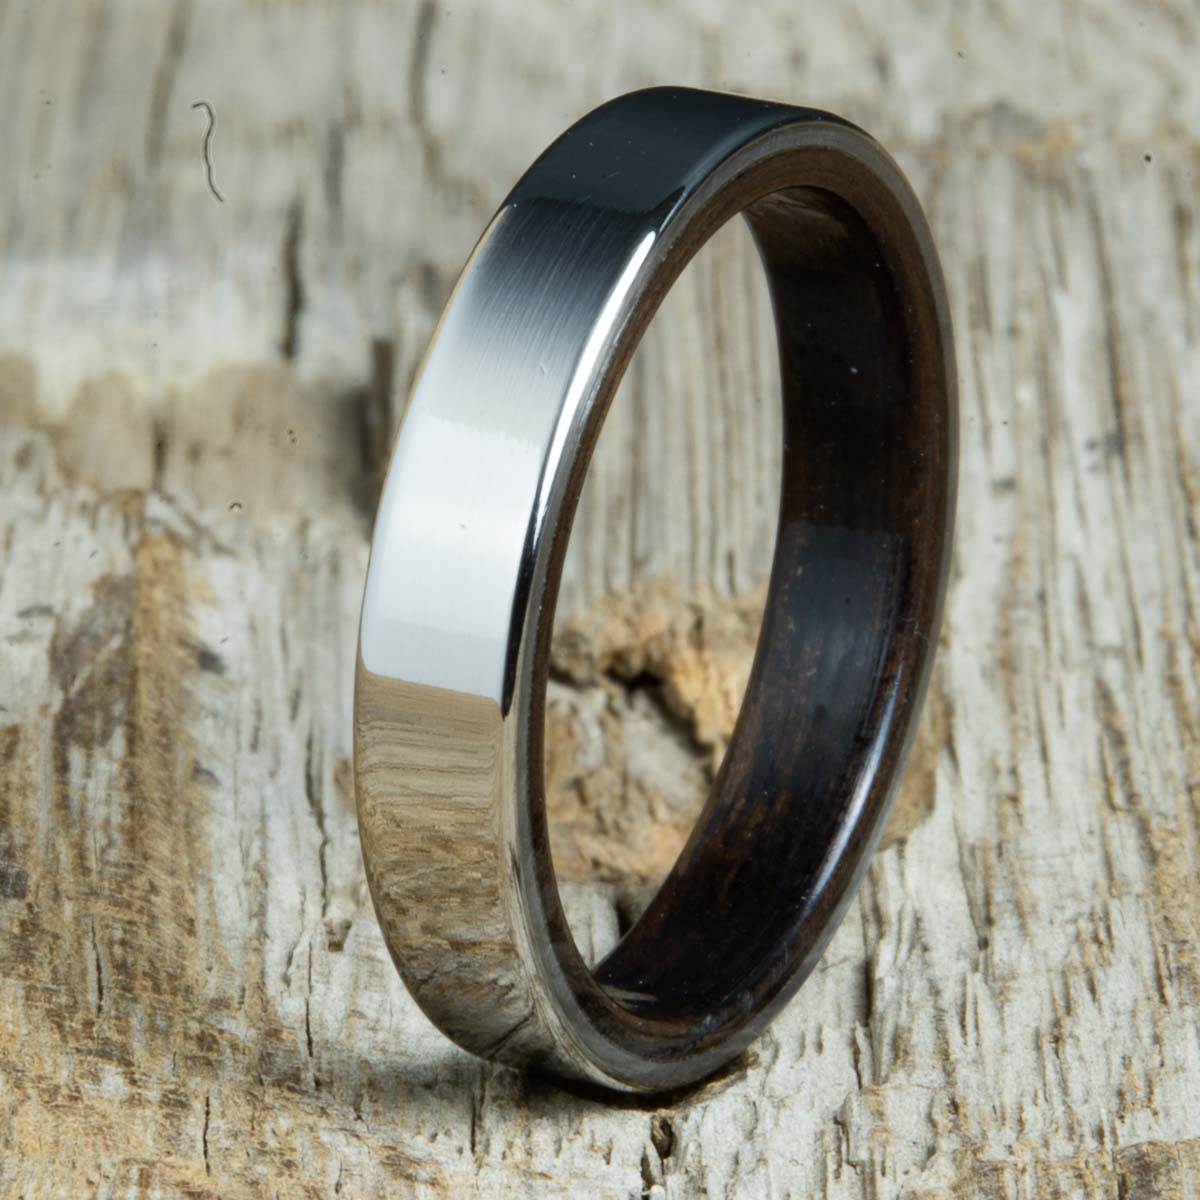 Ebony wood ring for women with polished titanium 4mm